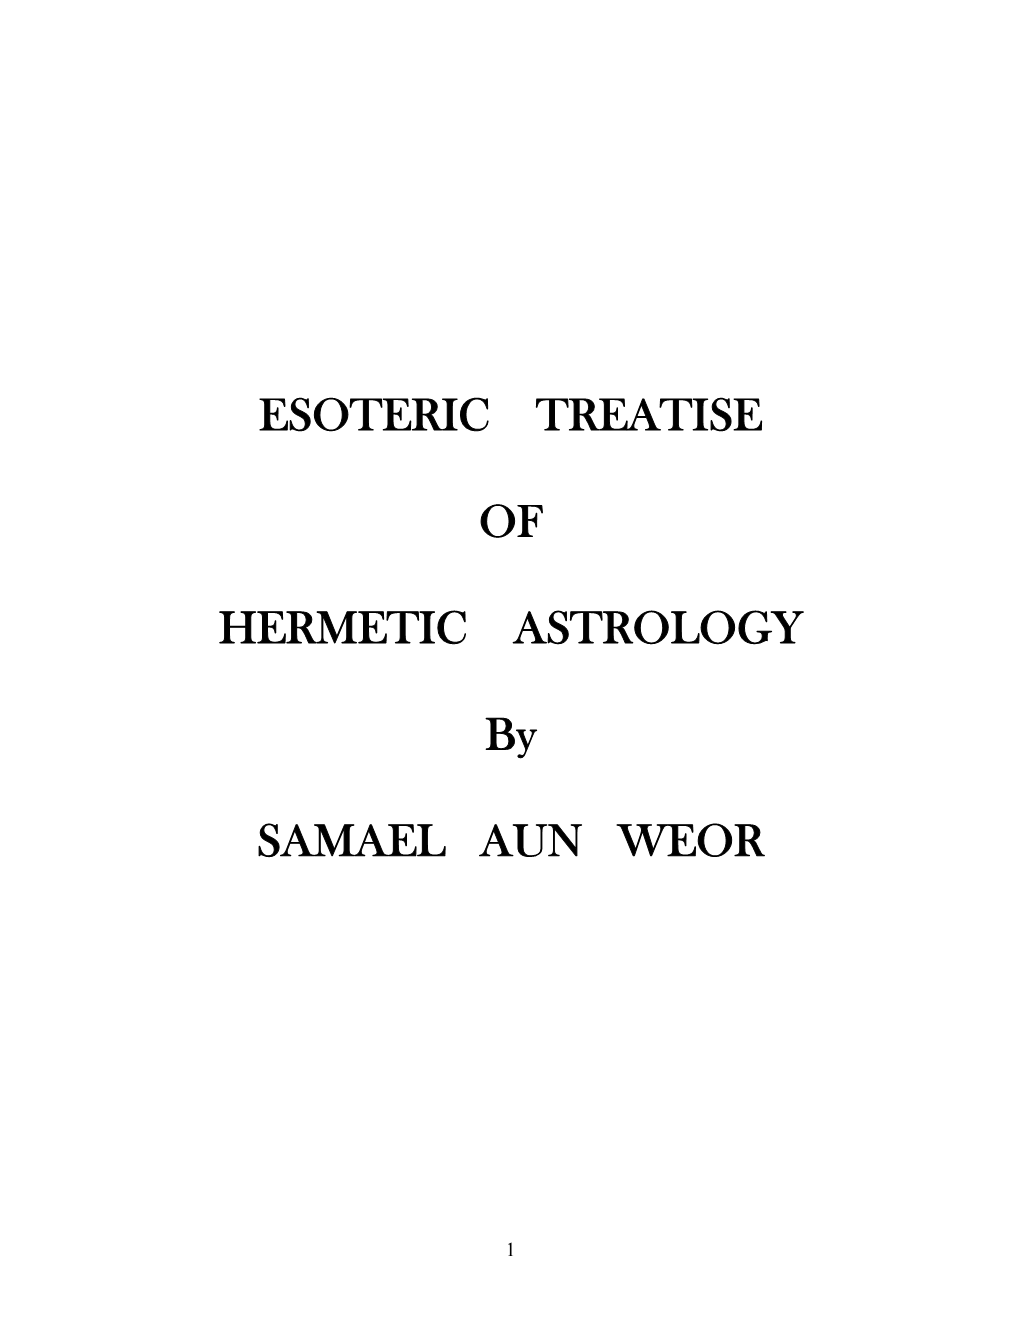 ESOTERIC TREATISE of HERMETIC ASTROLOGY by SAMAEL AUN